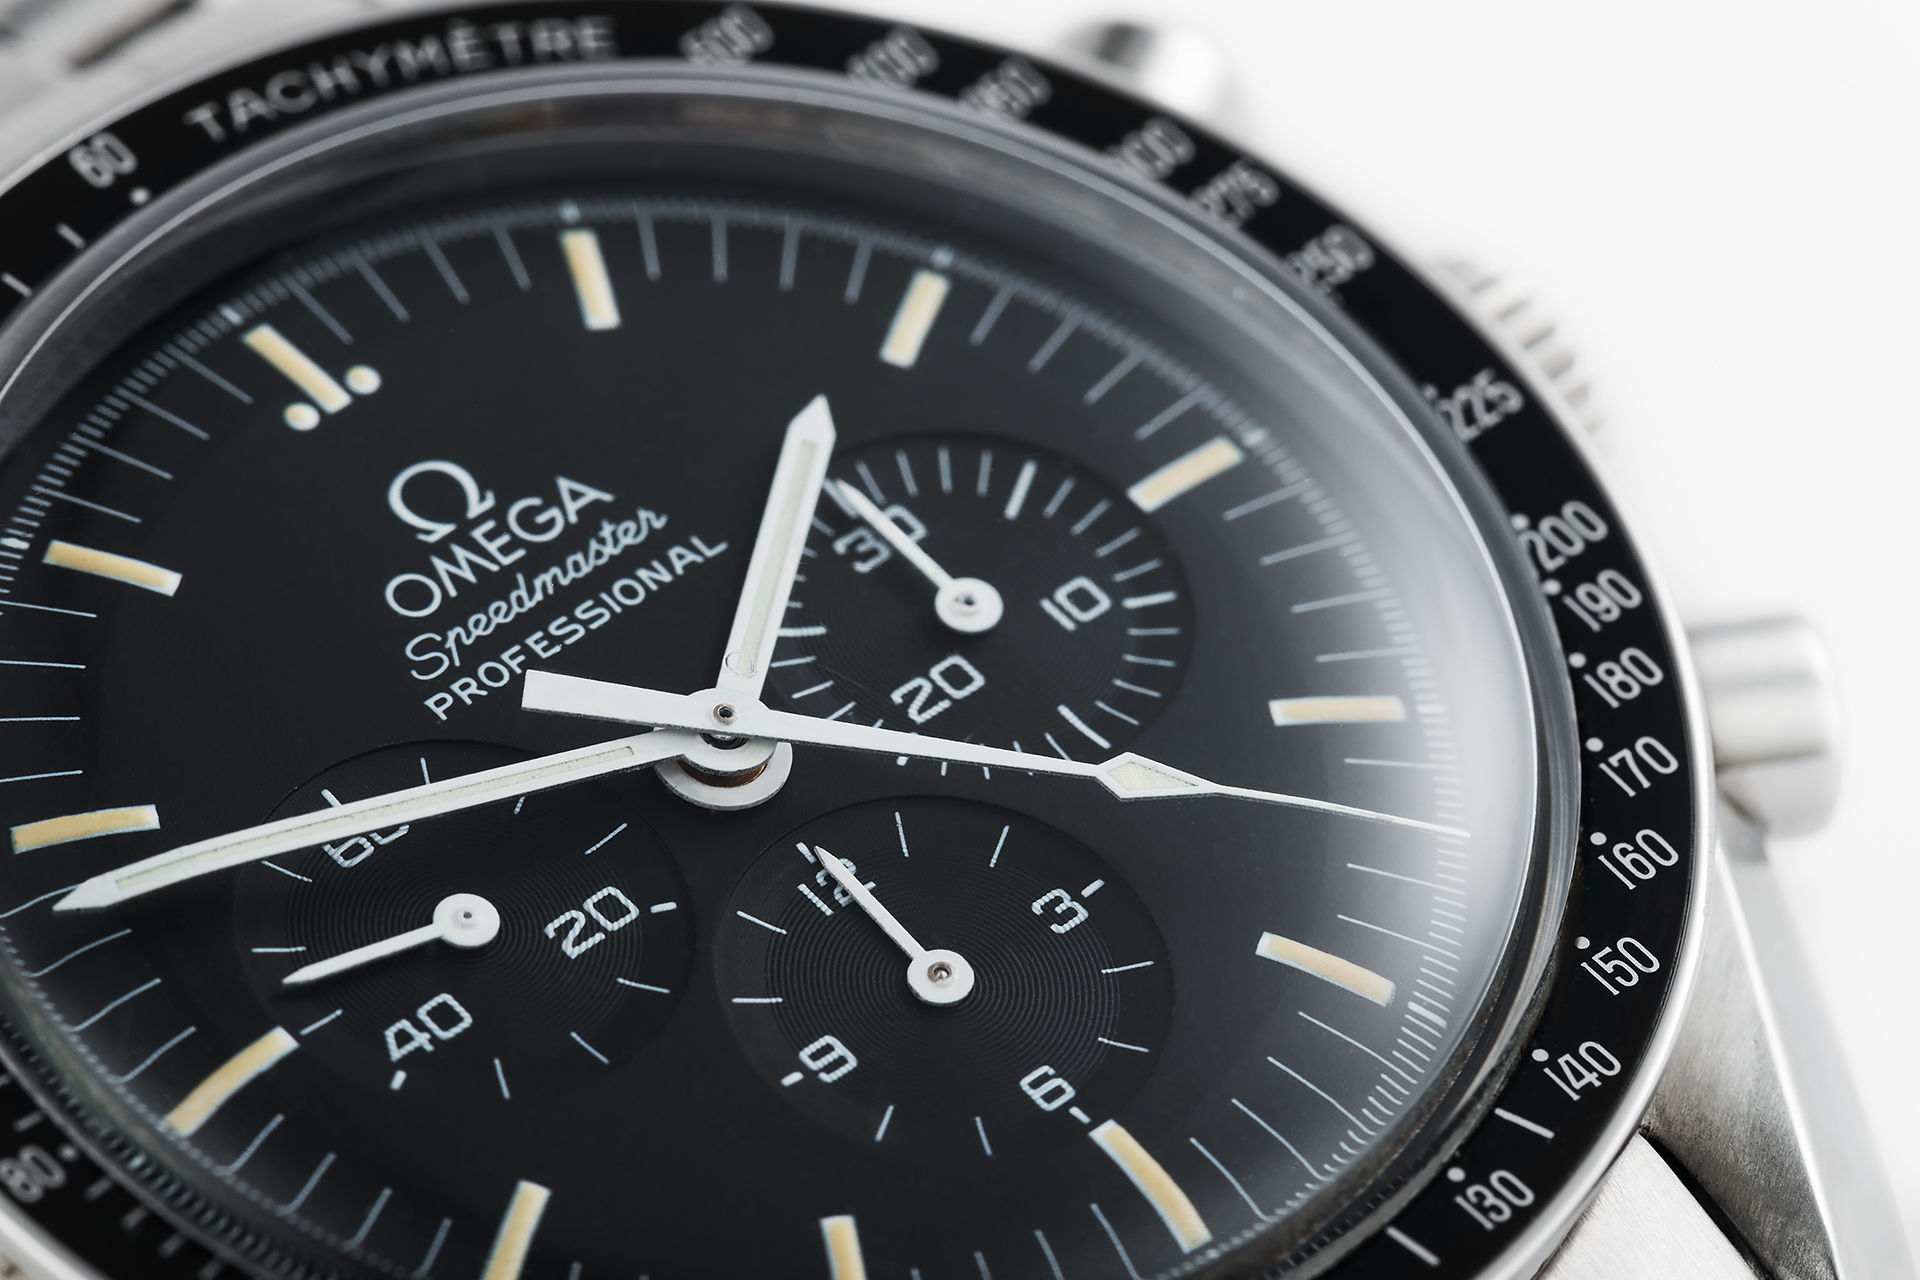 ref ST145.022 71 | Vintage 'Moon Watch' | Omega Speedmaster